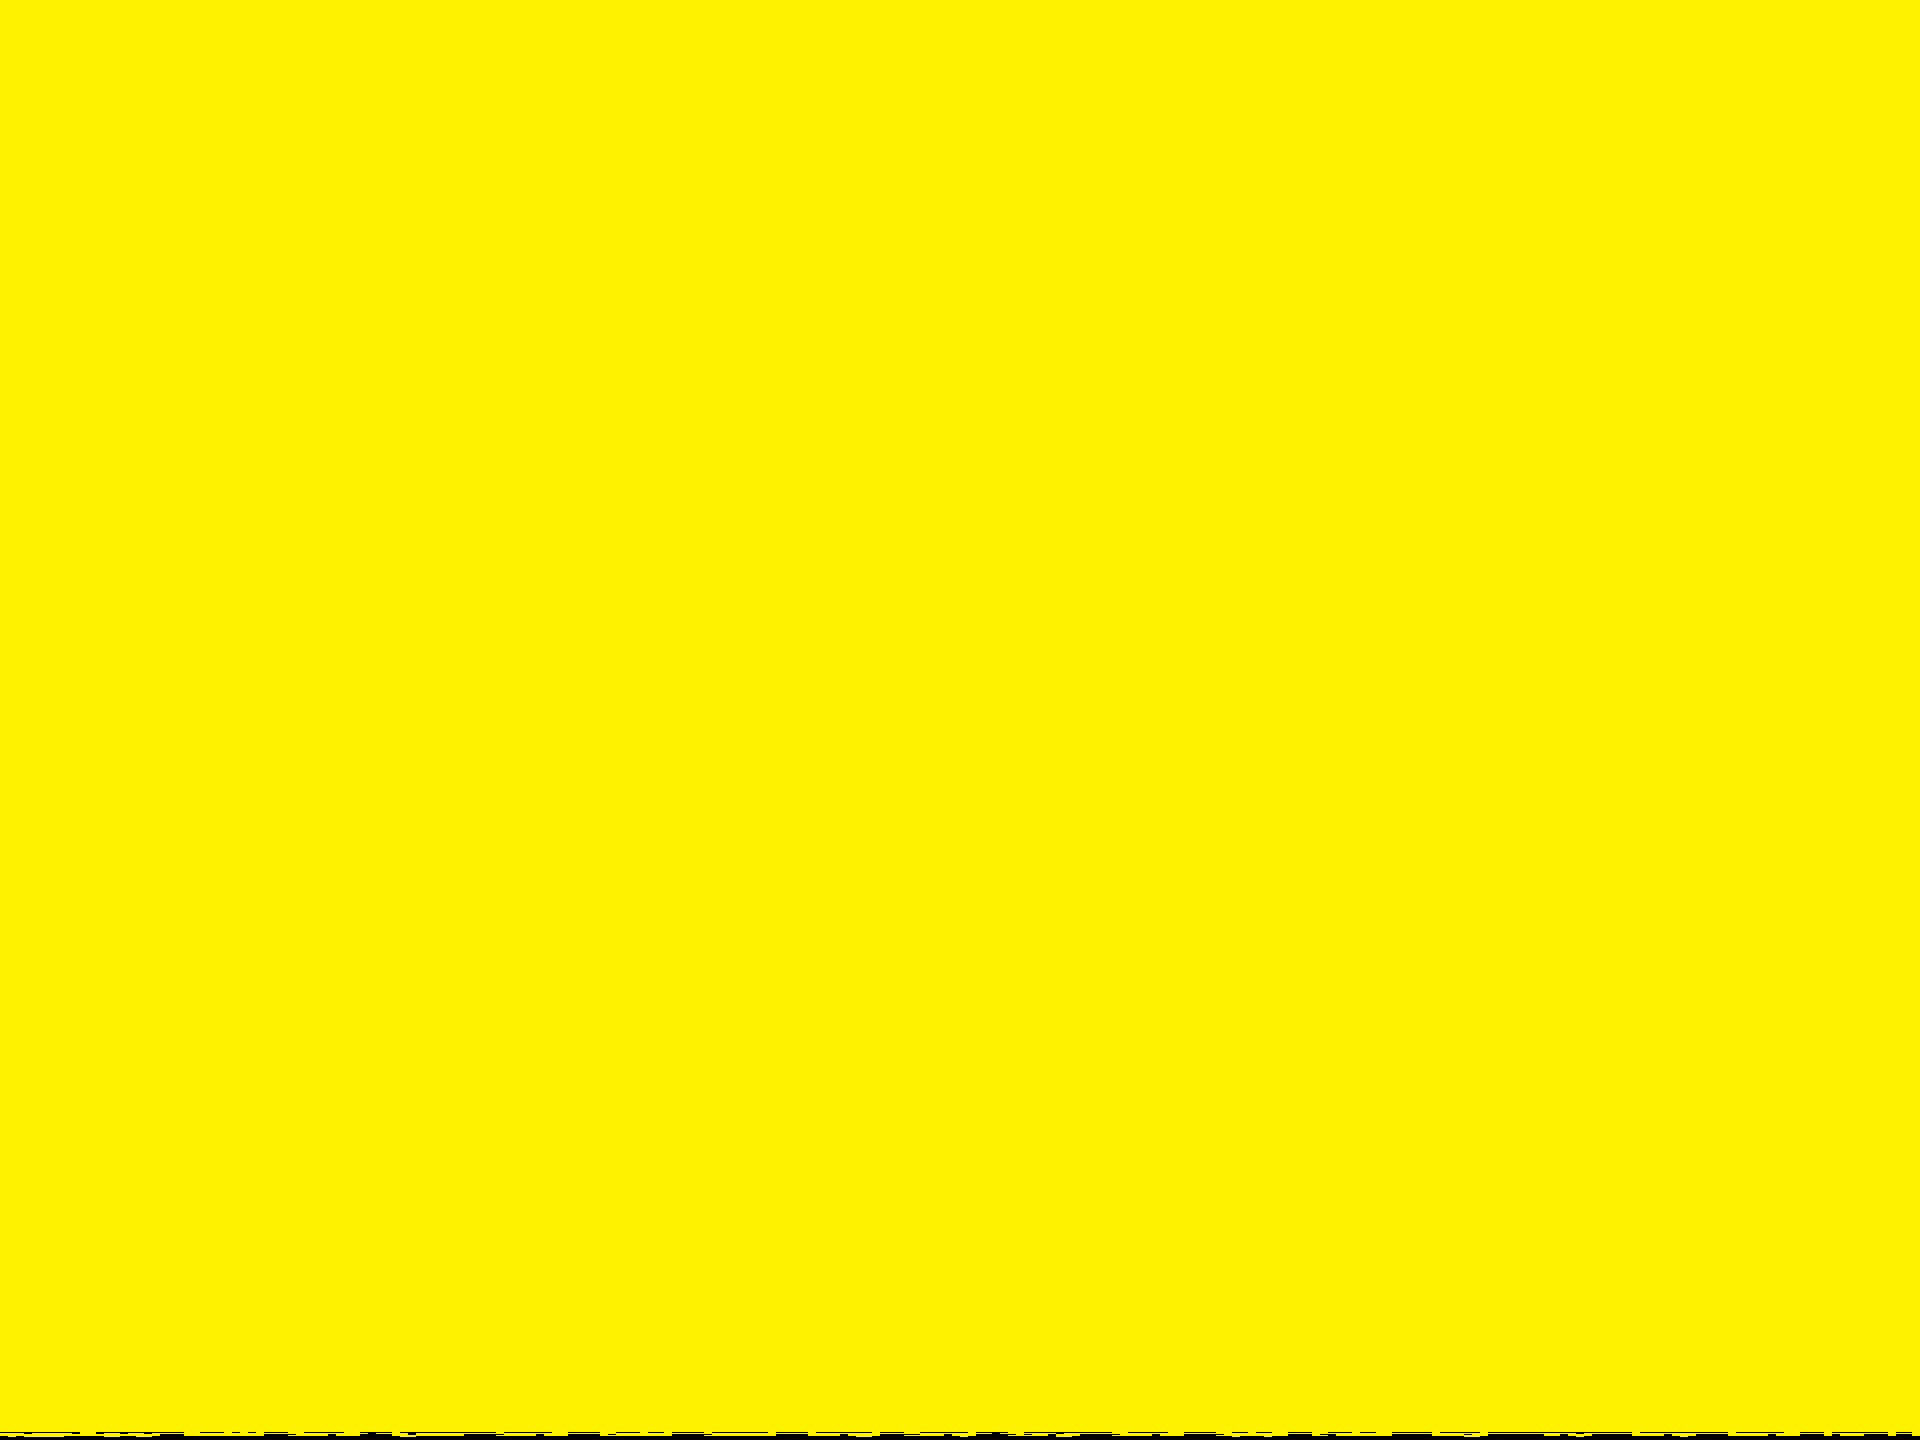 background yellow